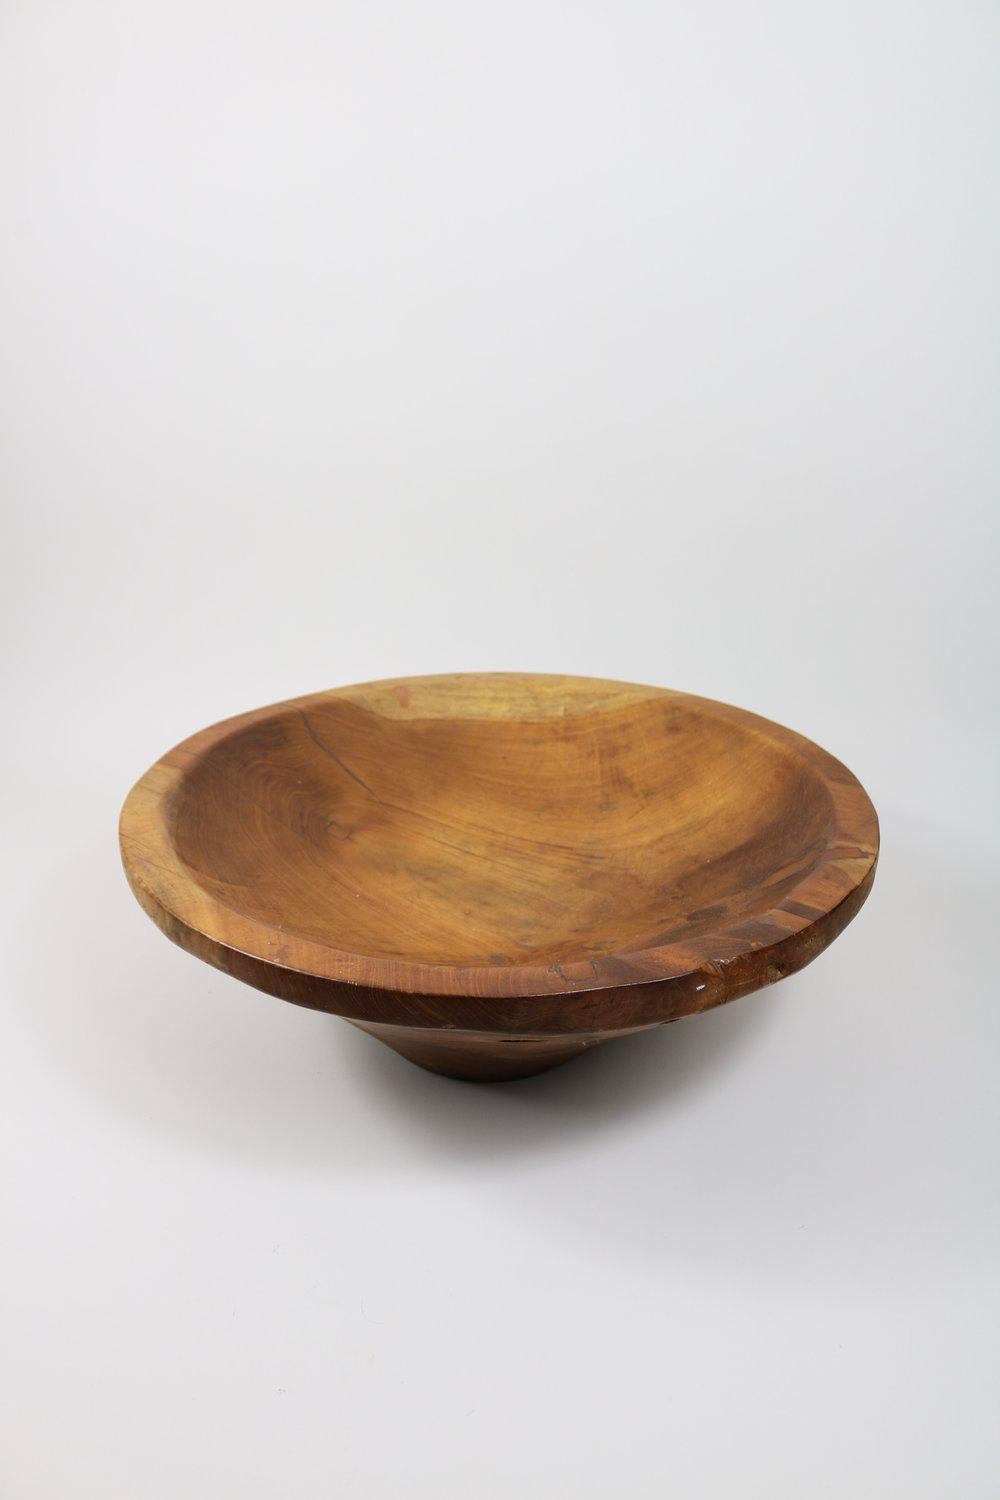 higuerilla wood bowl